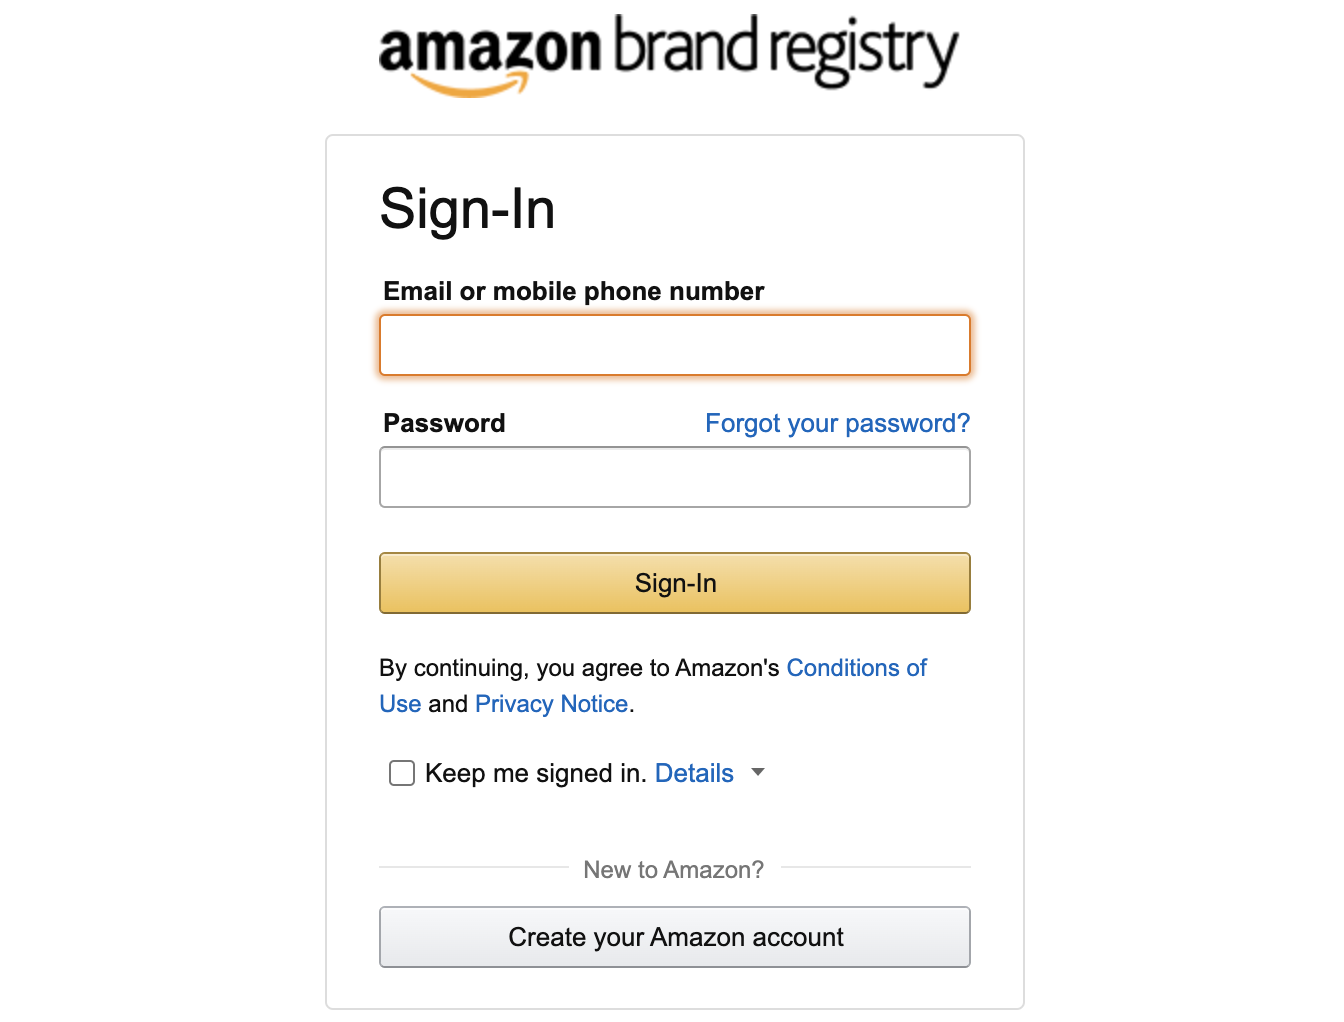 Amazon Brand Registry Requirements